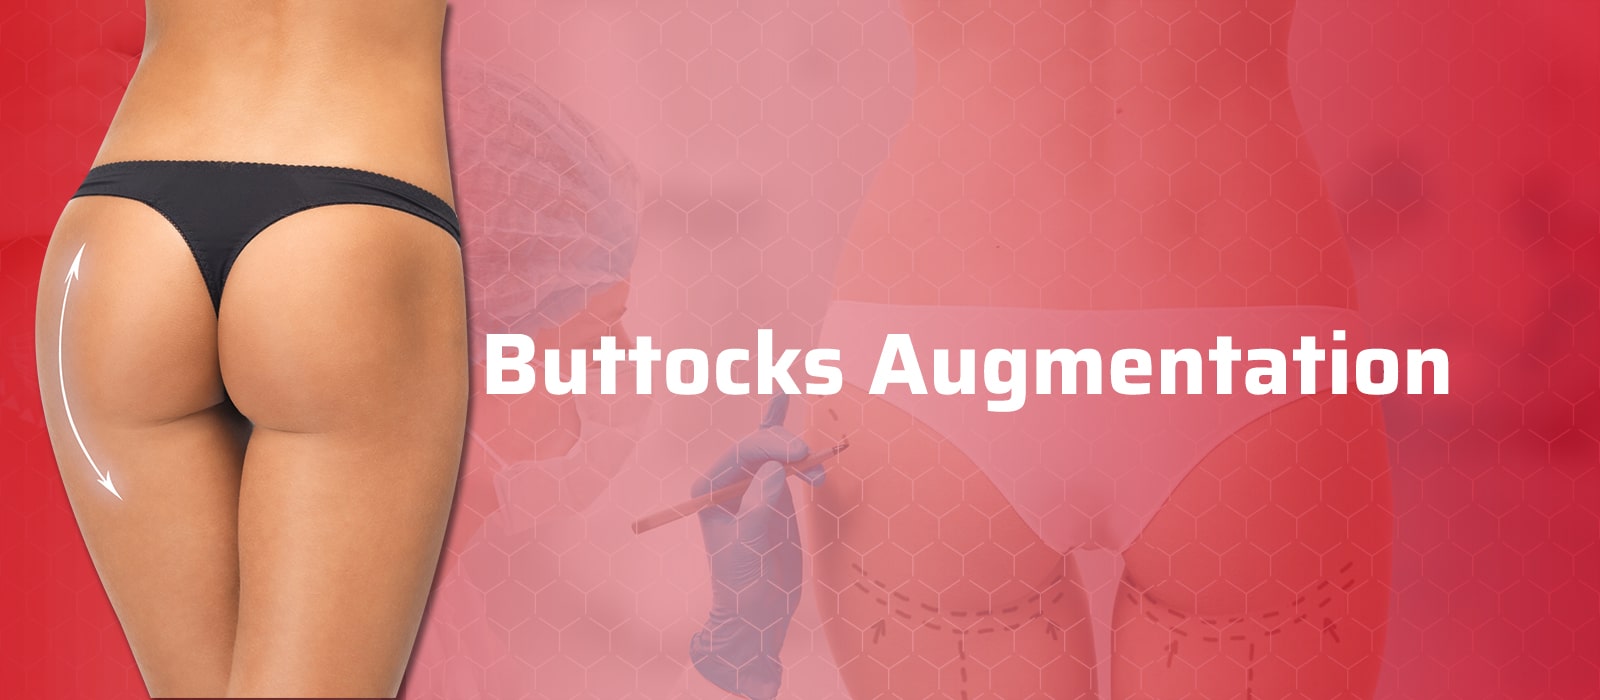 Buttocks Augmentation